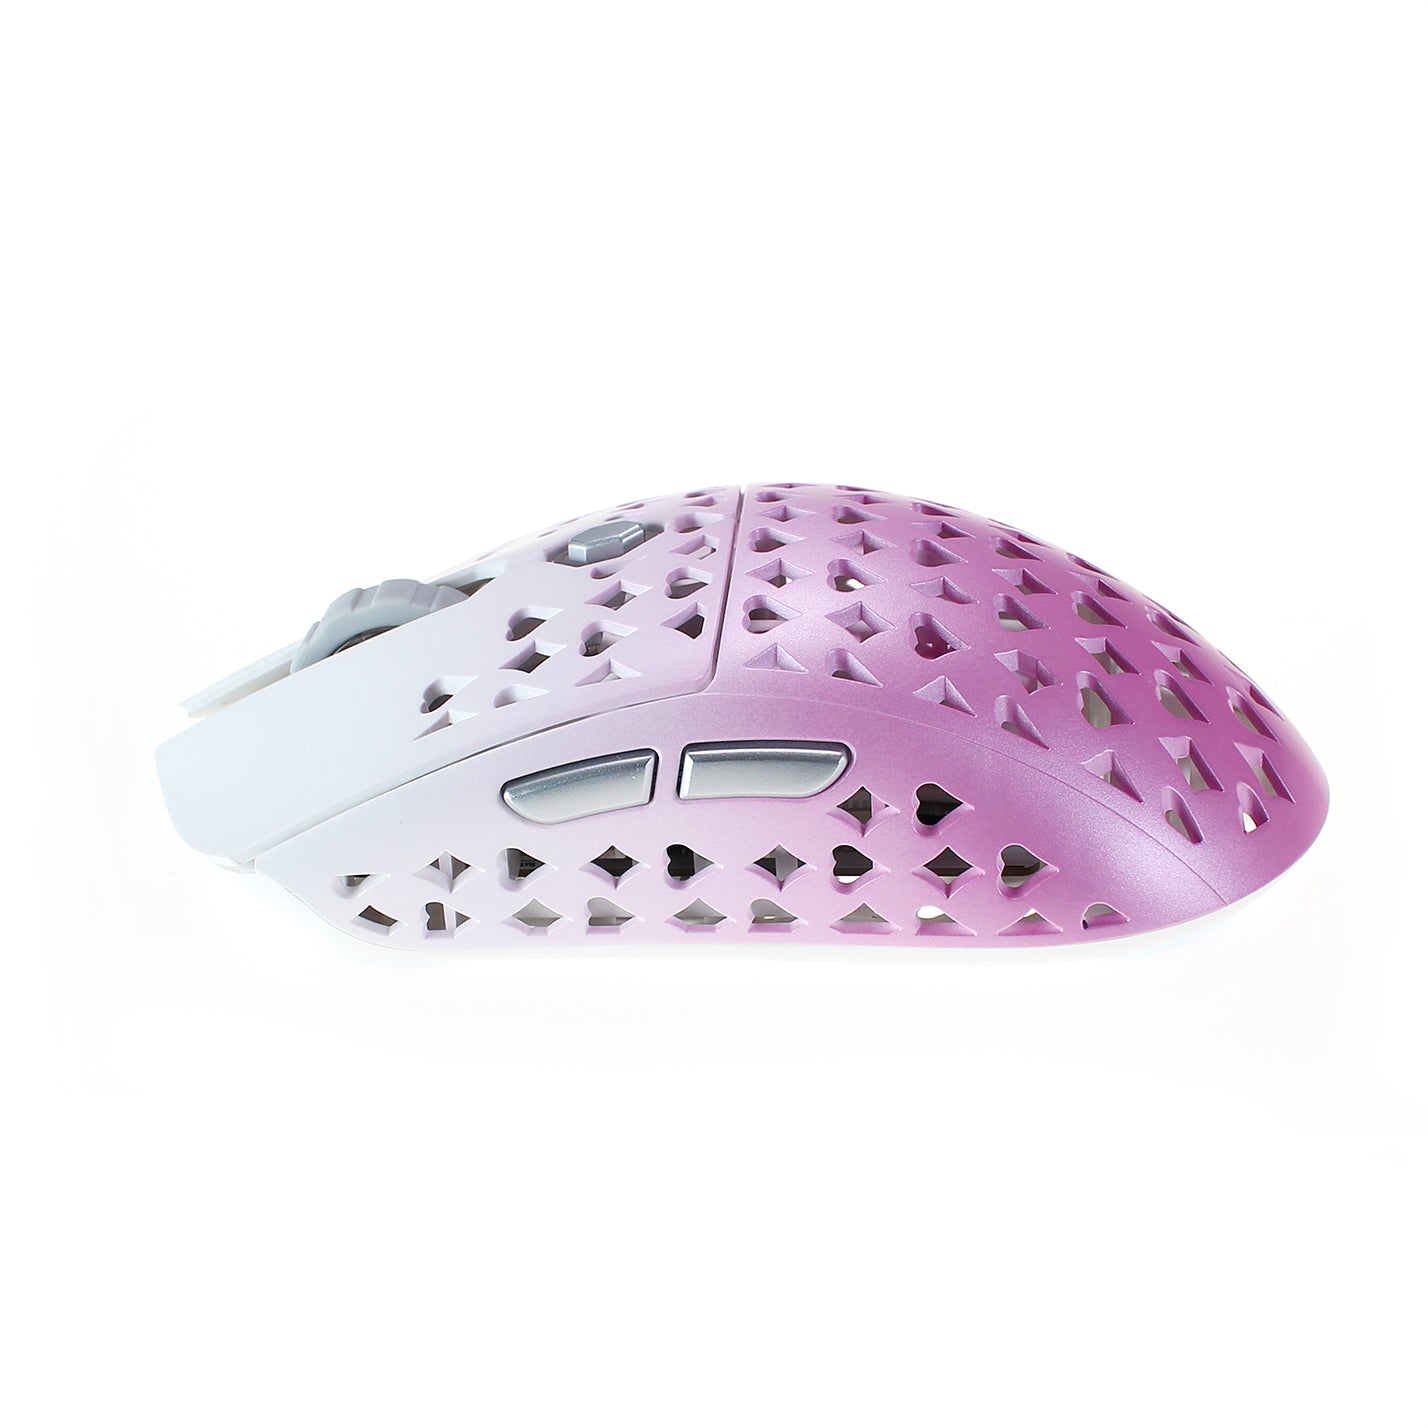 Vancer™ Gretxa Wireless Gaming Mouse V2 - Pink